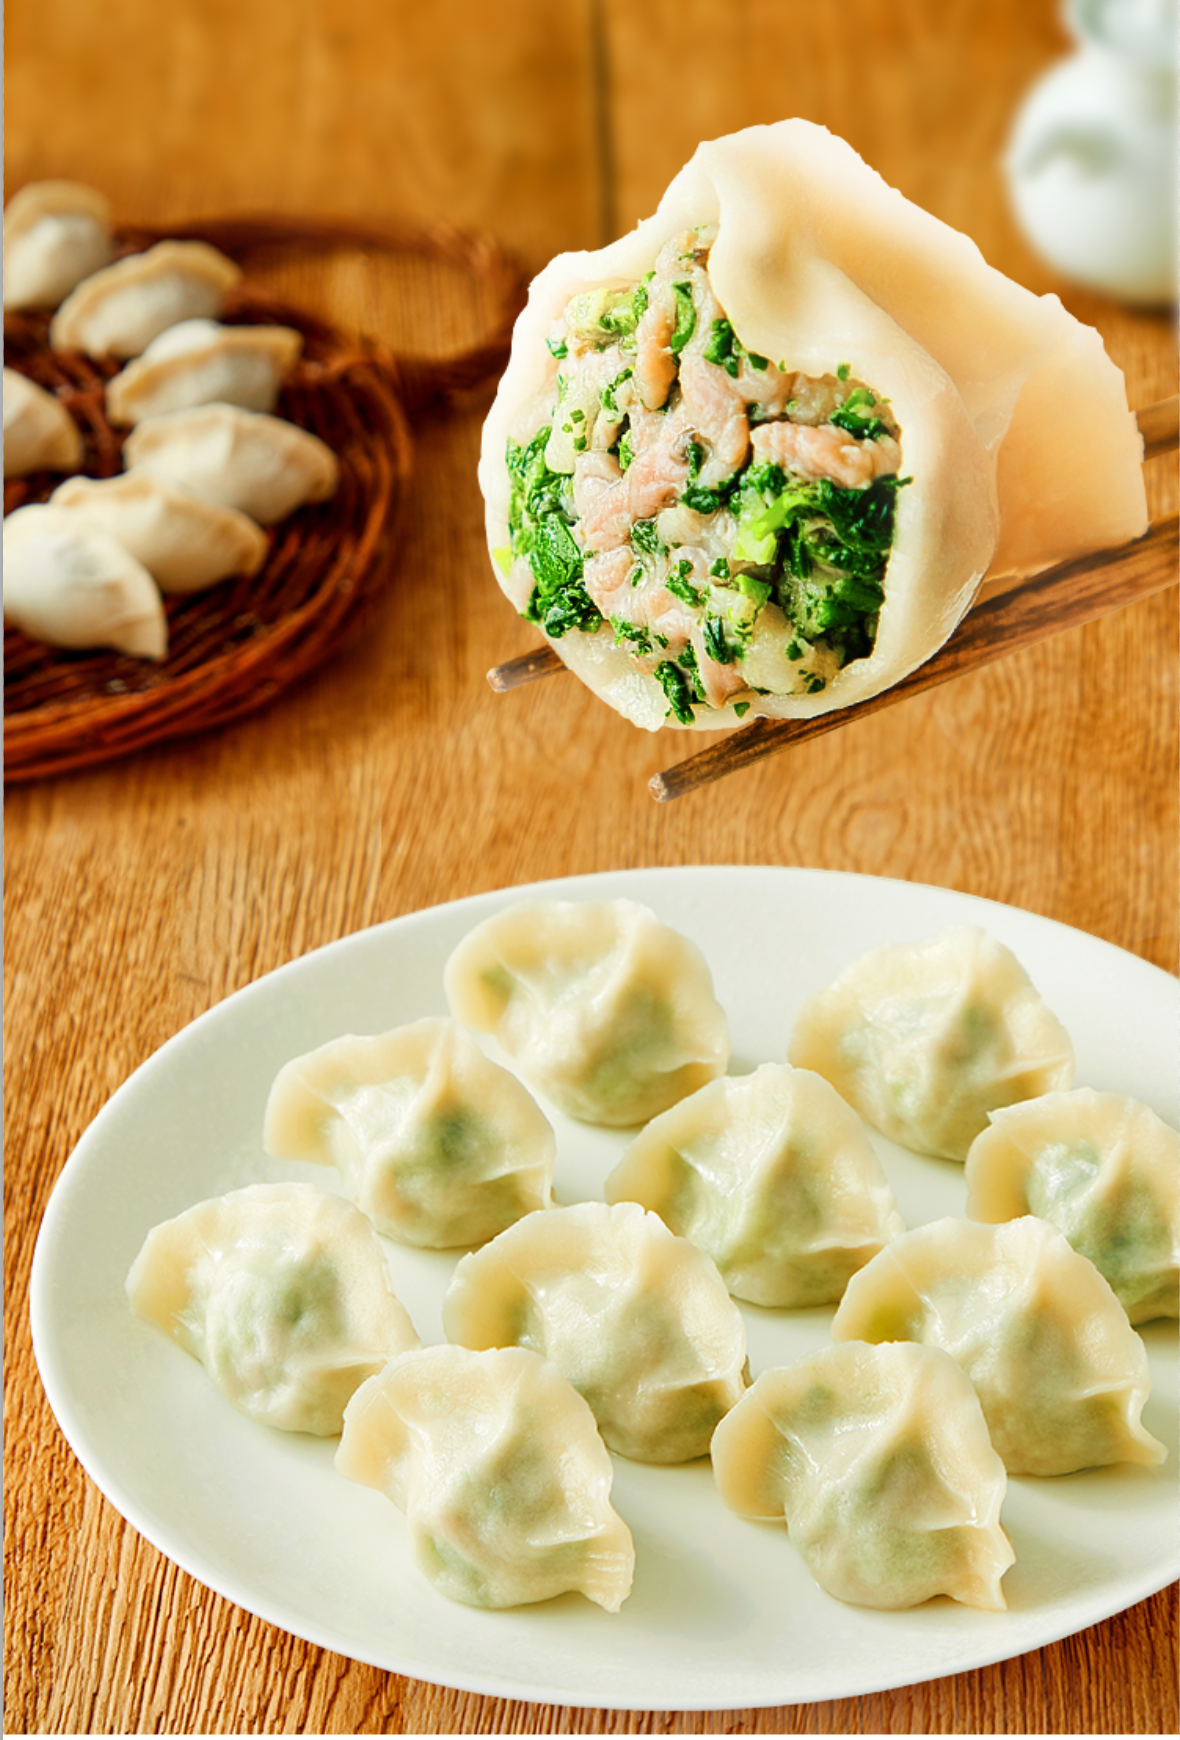 Shouda Pork & Shepherd's Purse Asian-Style Dumpling 手打天下猪肉荠菜水饺